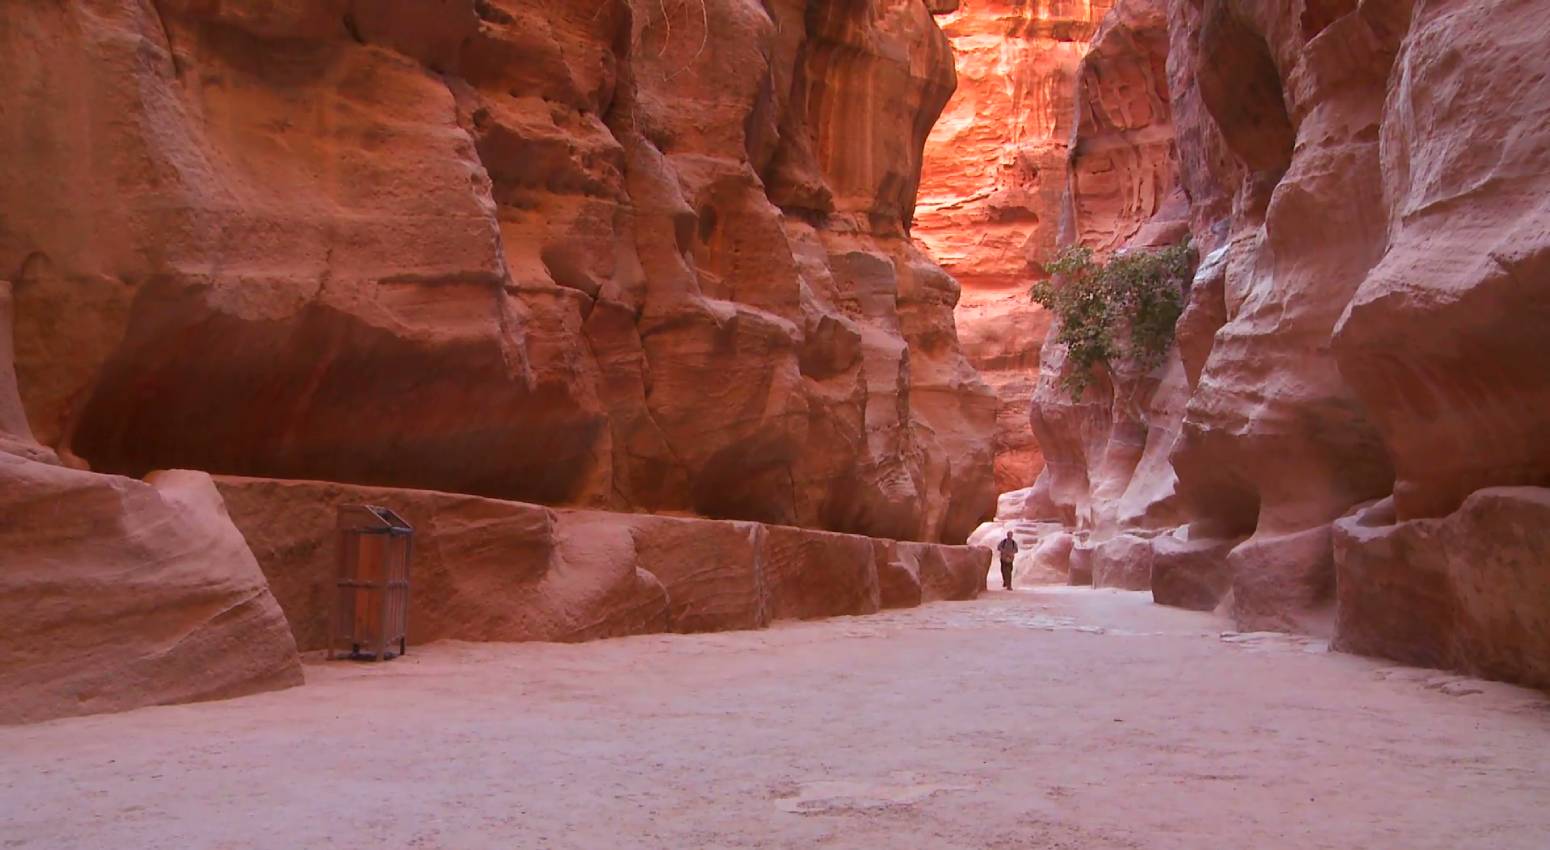 A person walking through the narrow canyons of Petra, Jordan